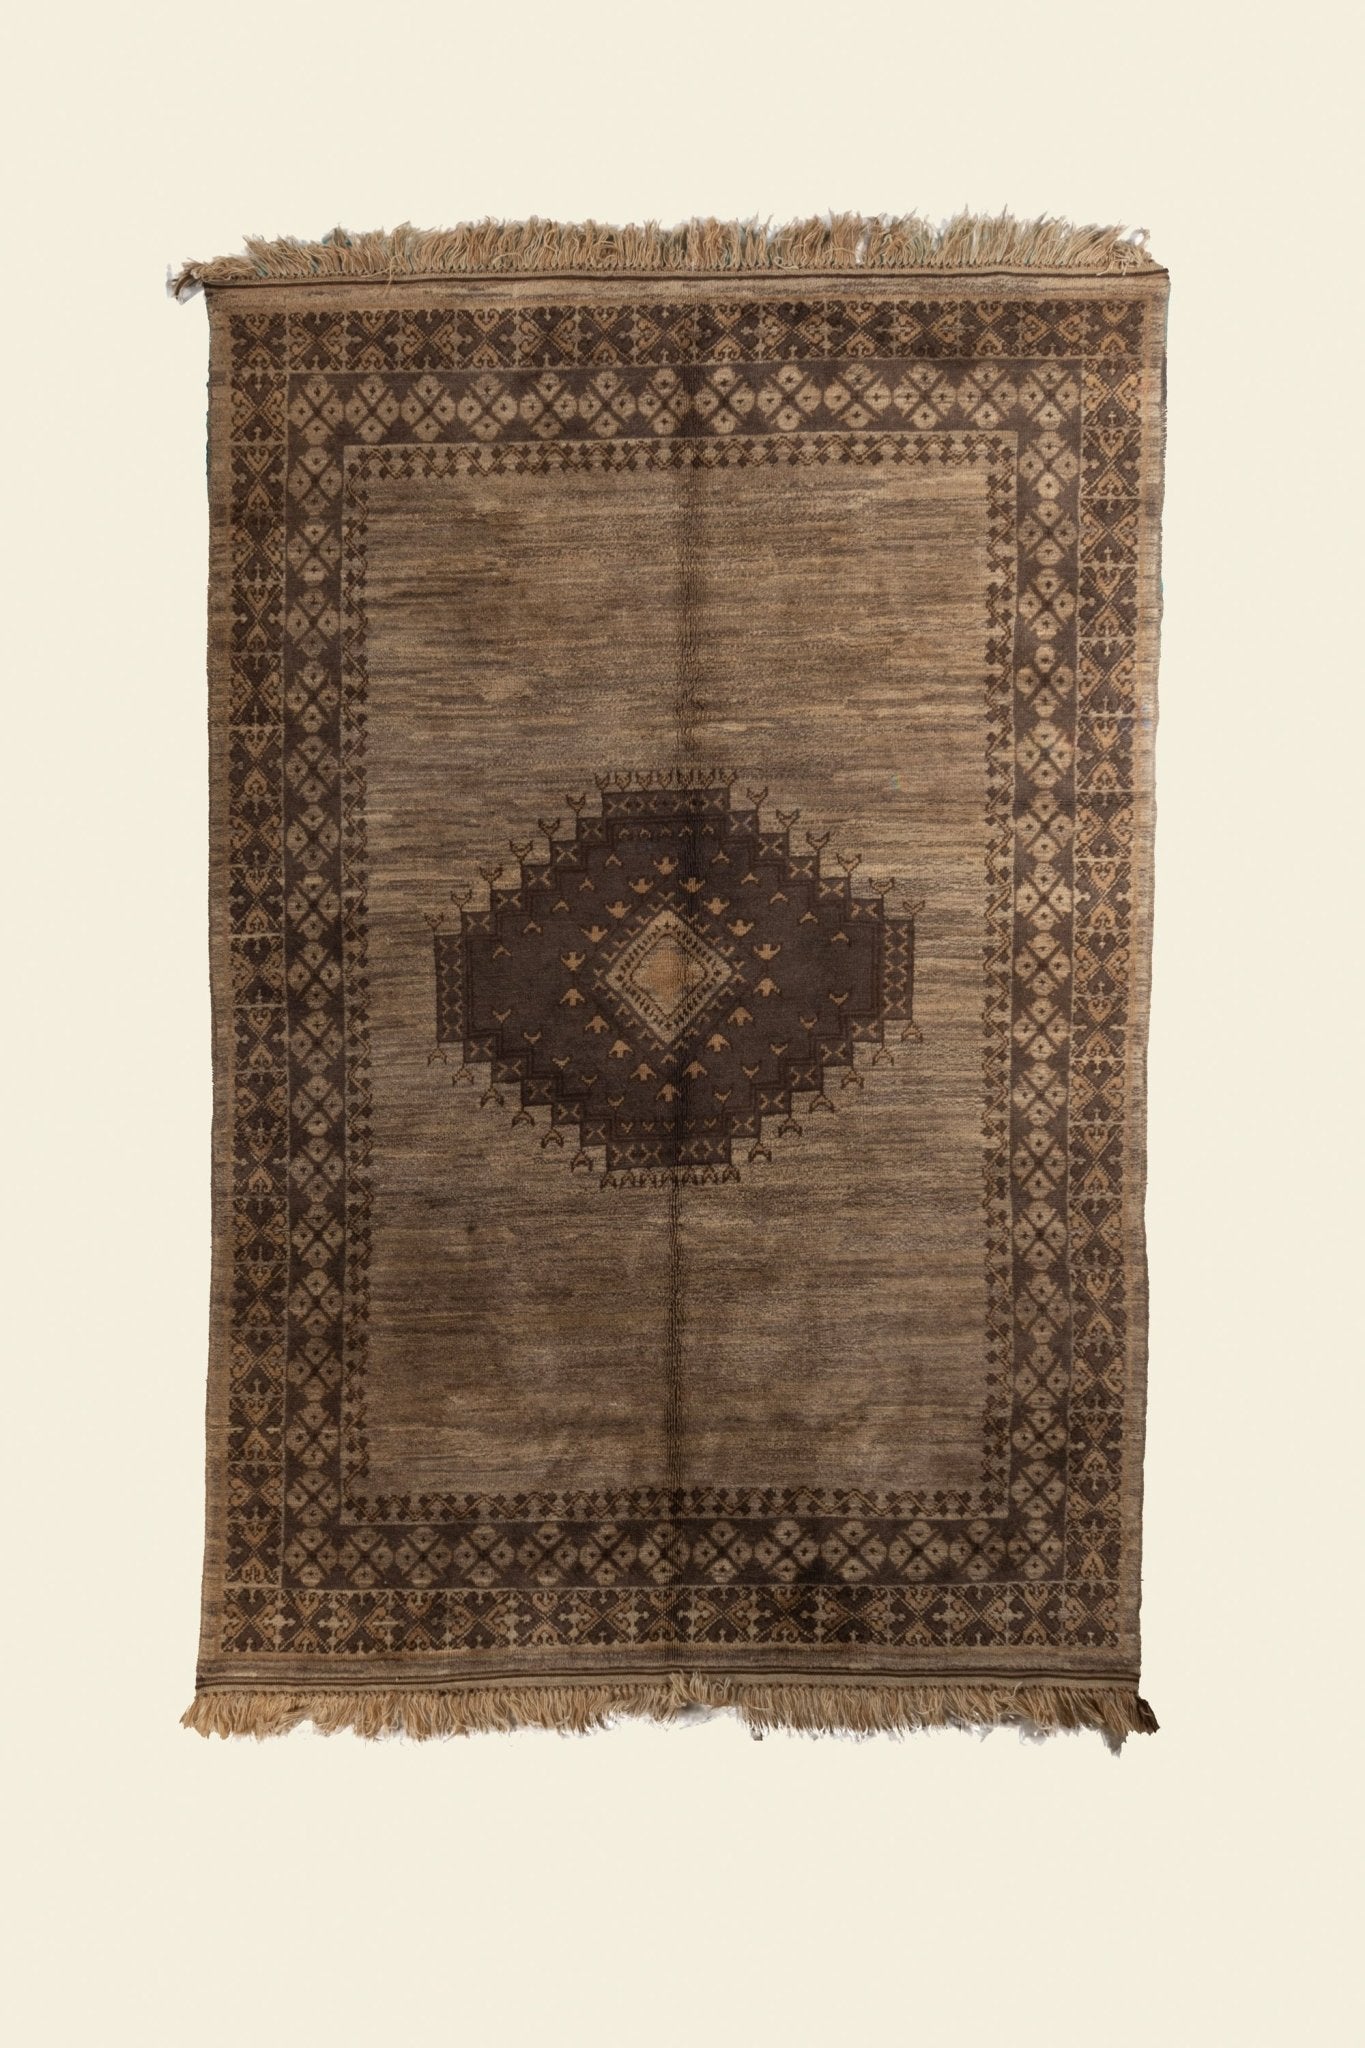 Vintage Rabat Moroccan Rug 6’49’’ x 9'48" - 198 cm x 289 cm (Wool) - Dar Bouchaib Marrakech